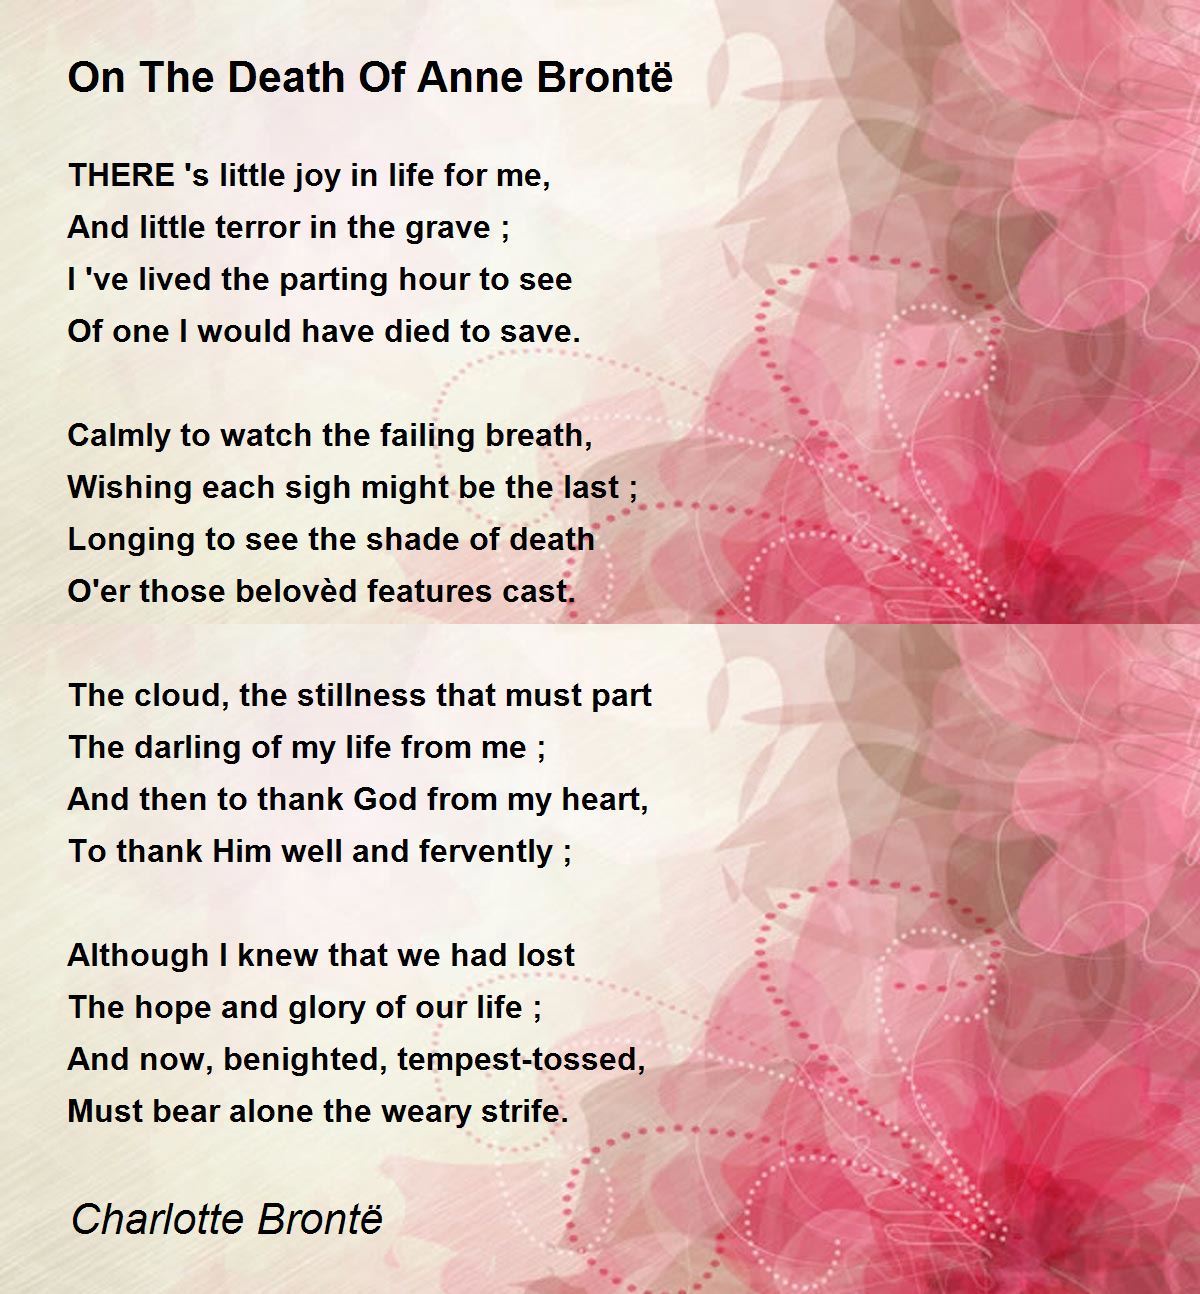 On The Death Of Anne Brontë Poem by Charlotte Brontë 